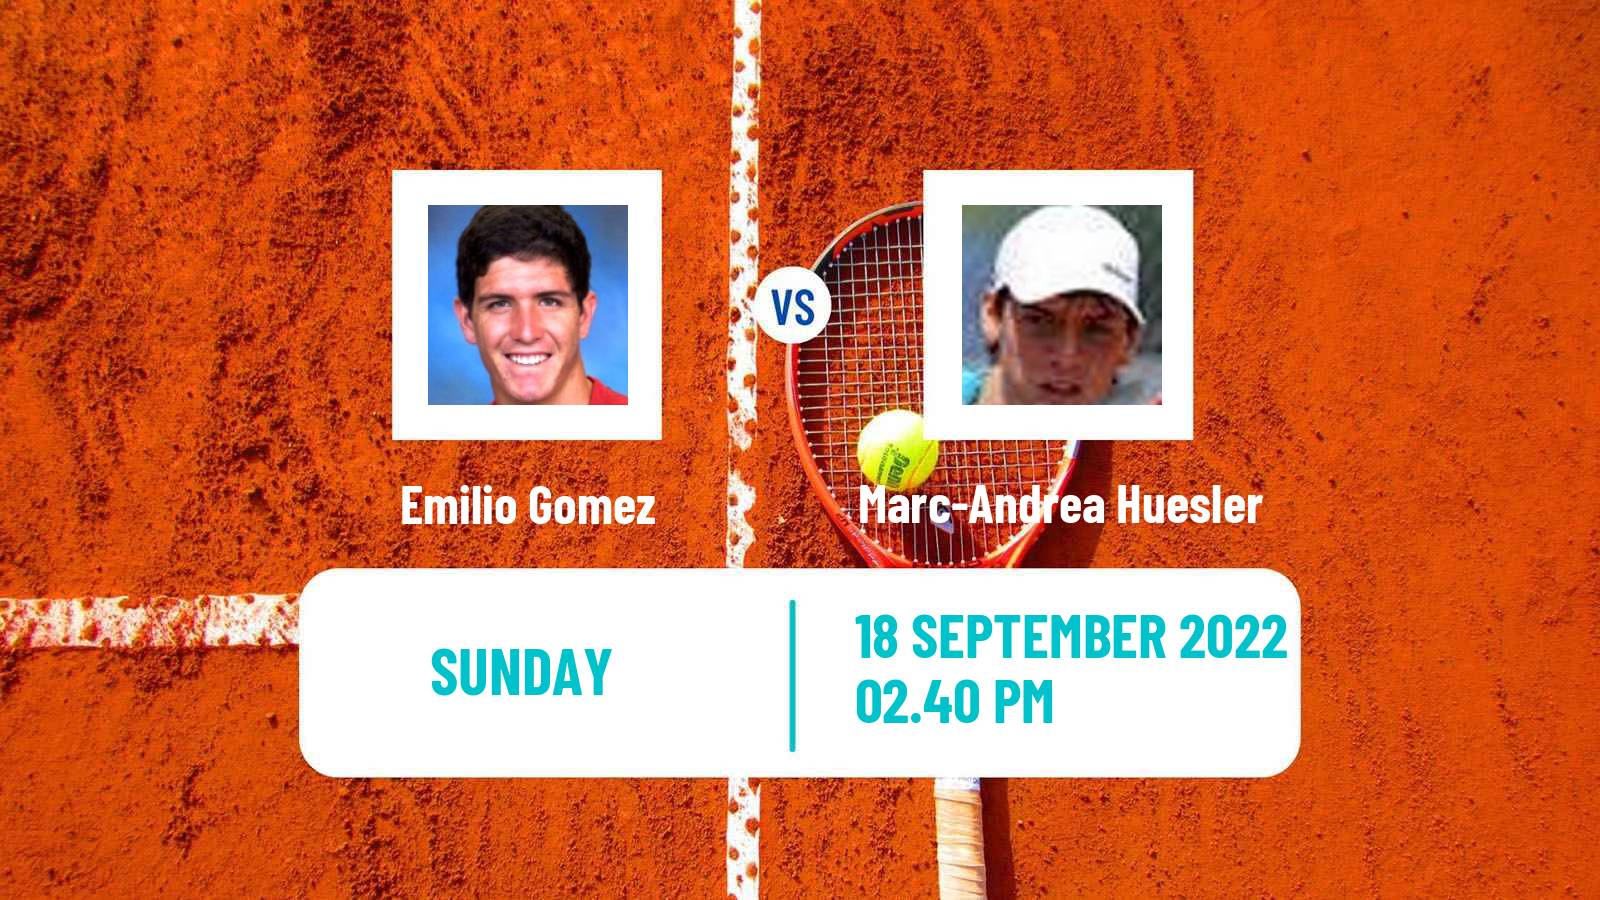 Tennis Davis Cup World Group I Emilio Gomez - Marc-Andrea Huesler